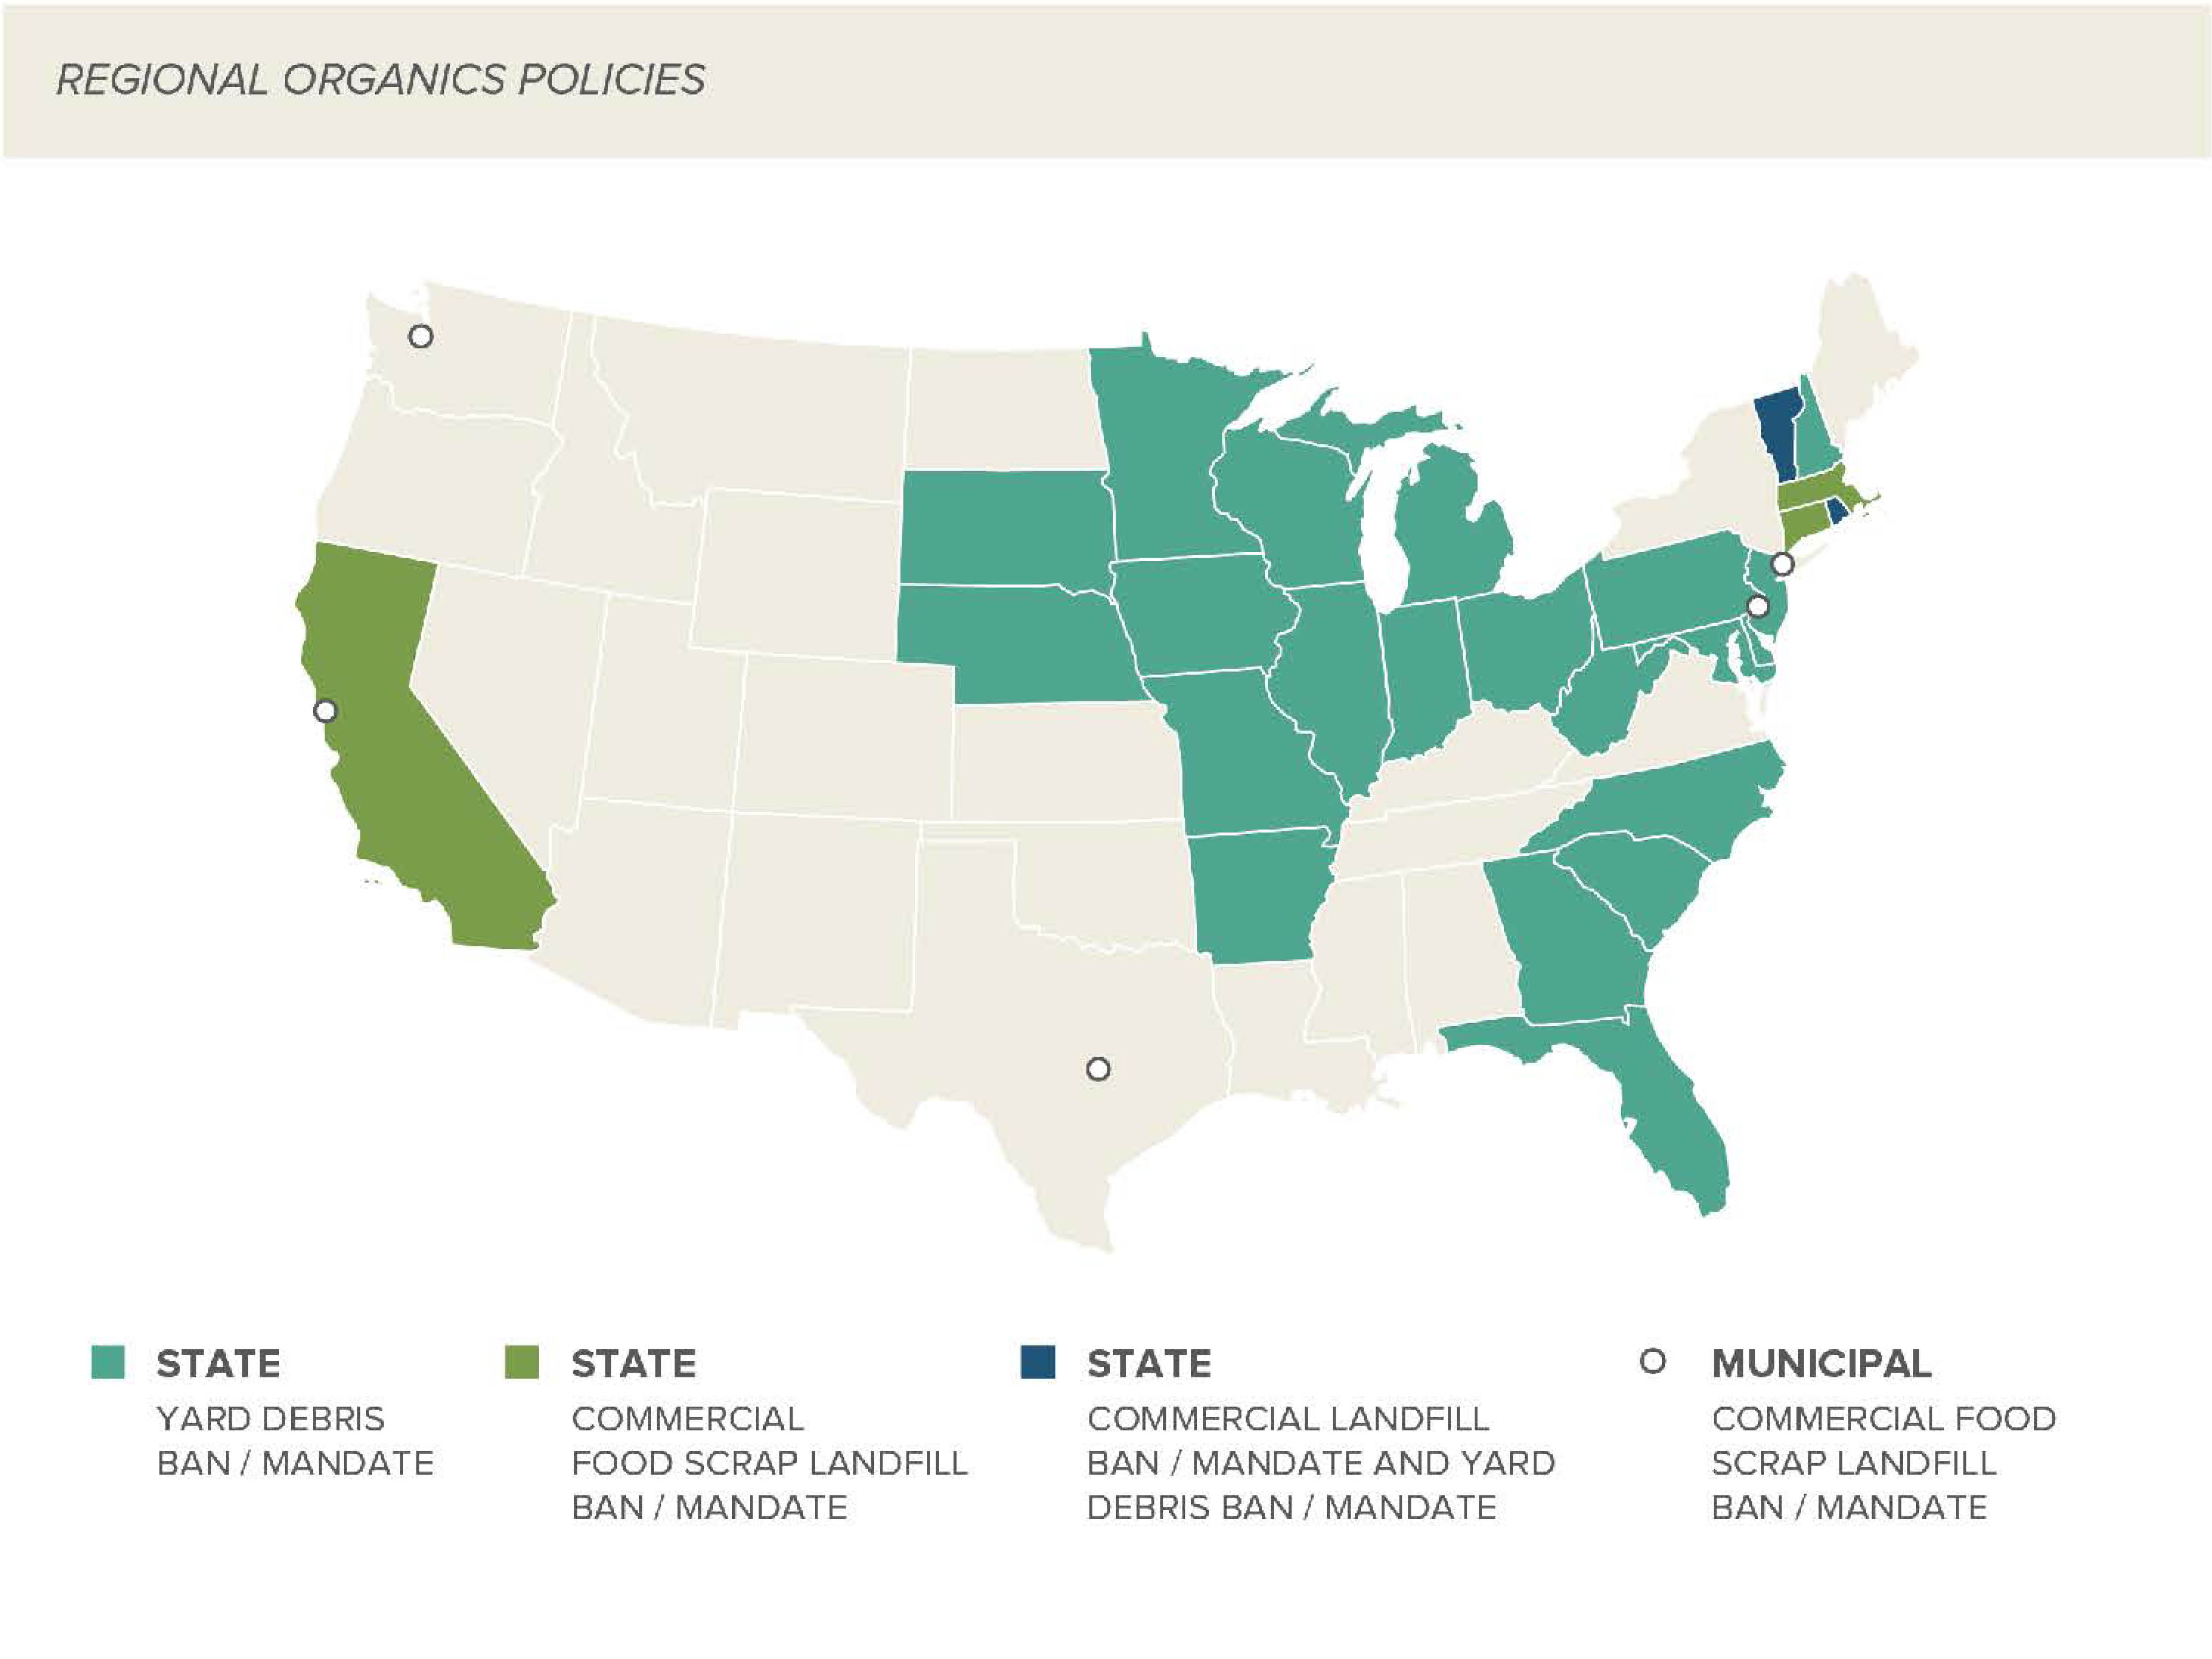 ReFED Roadmap Regional Organics Policies Map - Yard Debris, Food Scrap